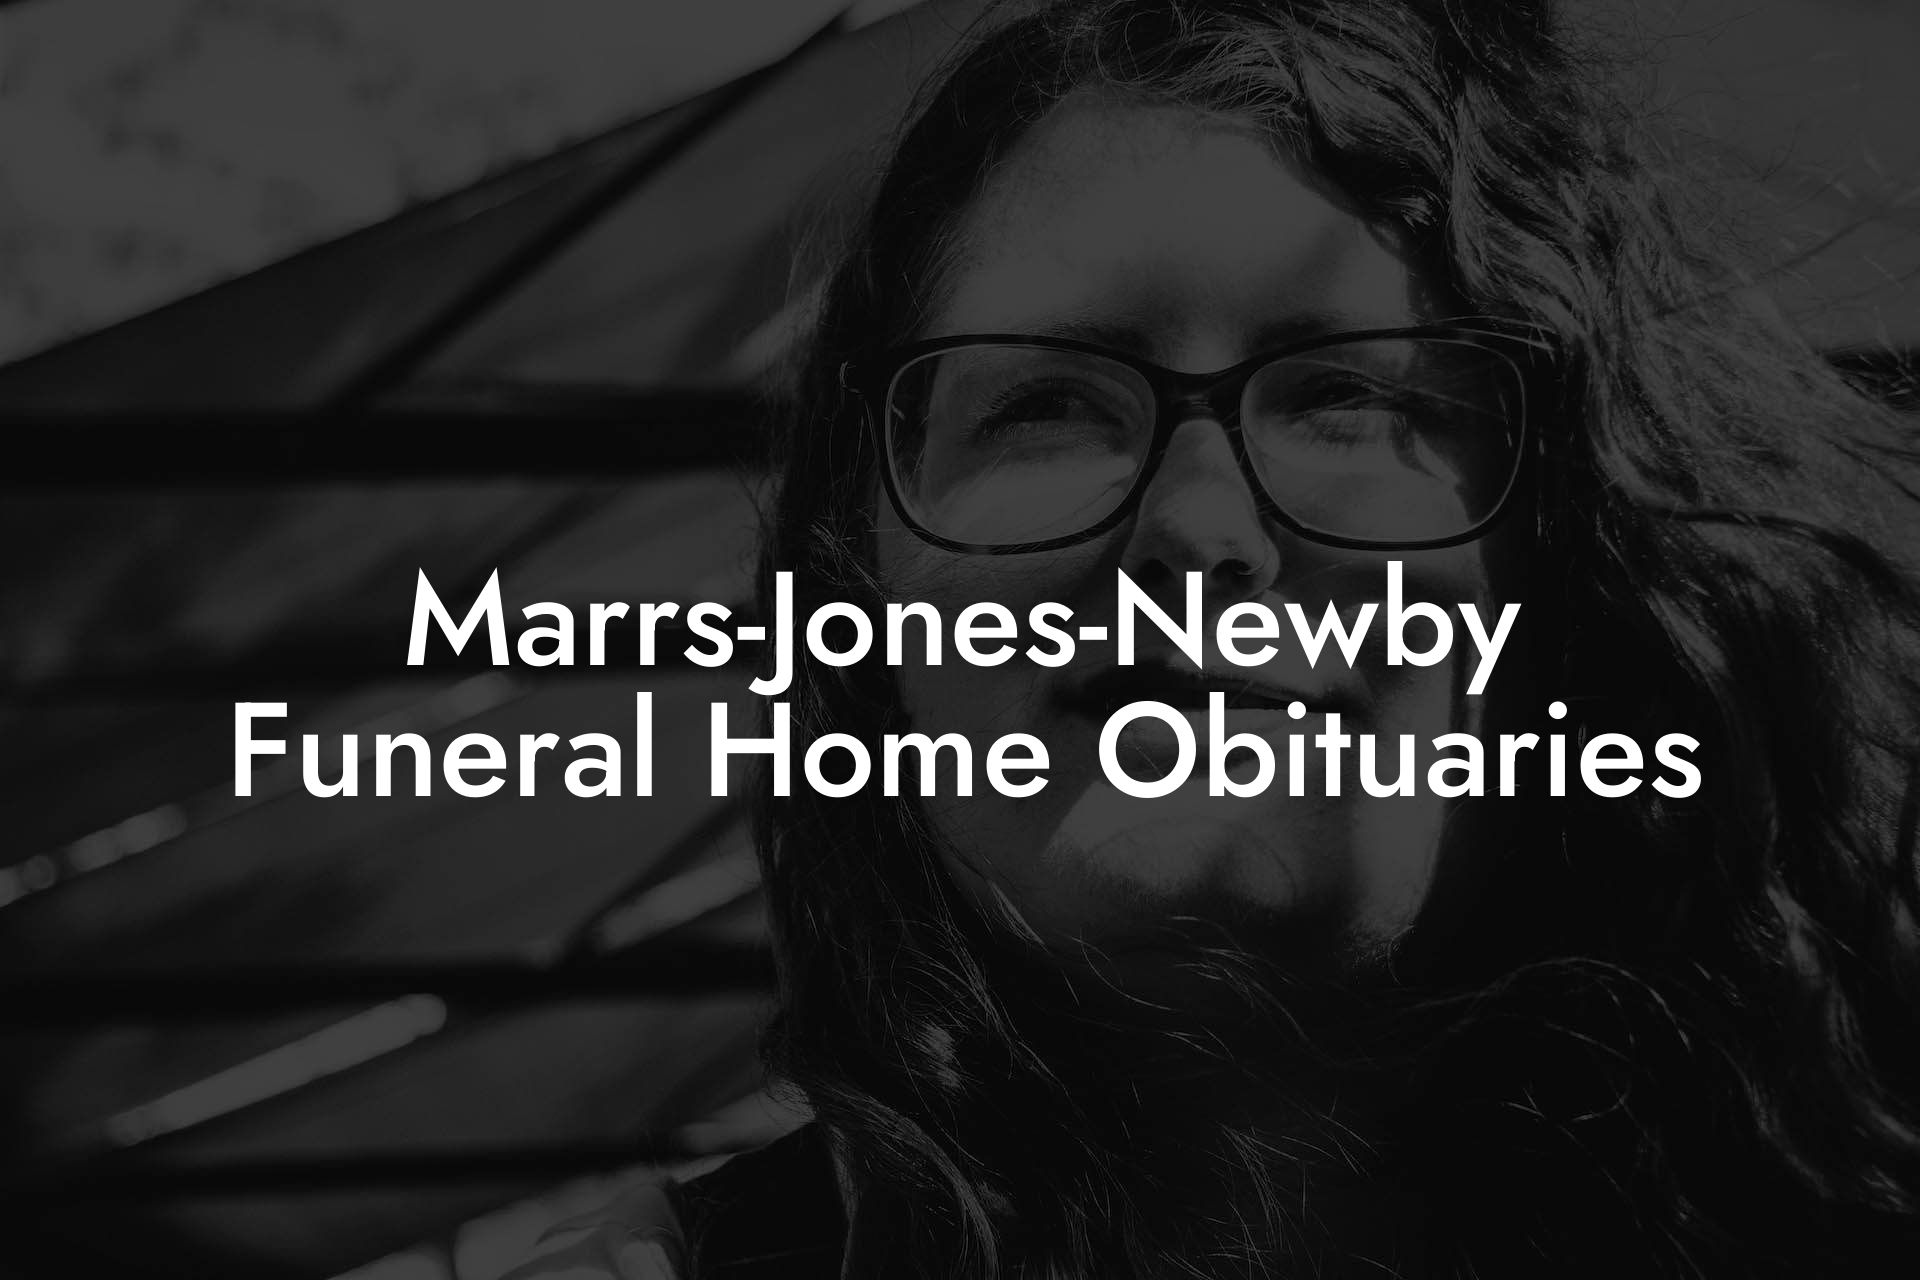 Marrs-Jones-Newby Funeral Home Obituaries